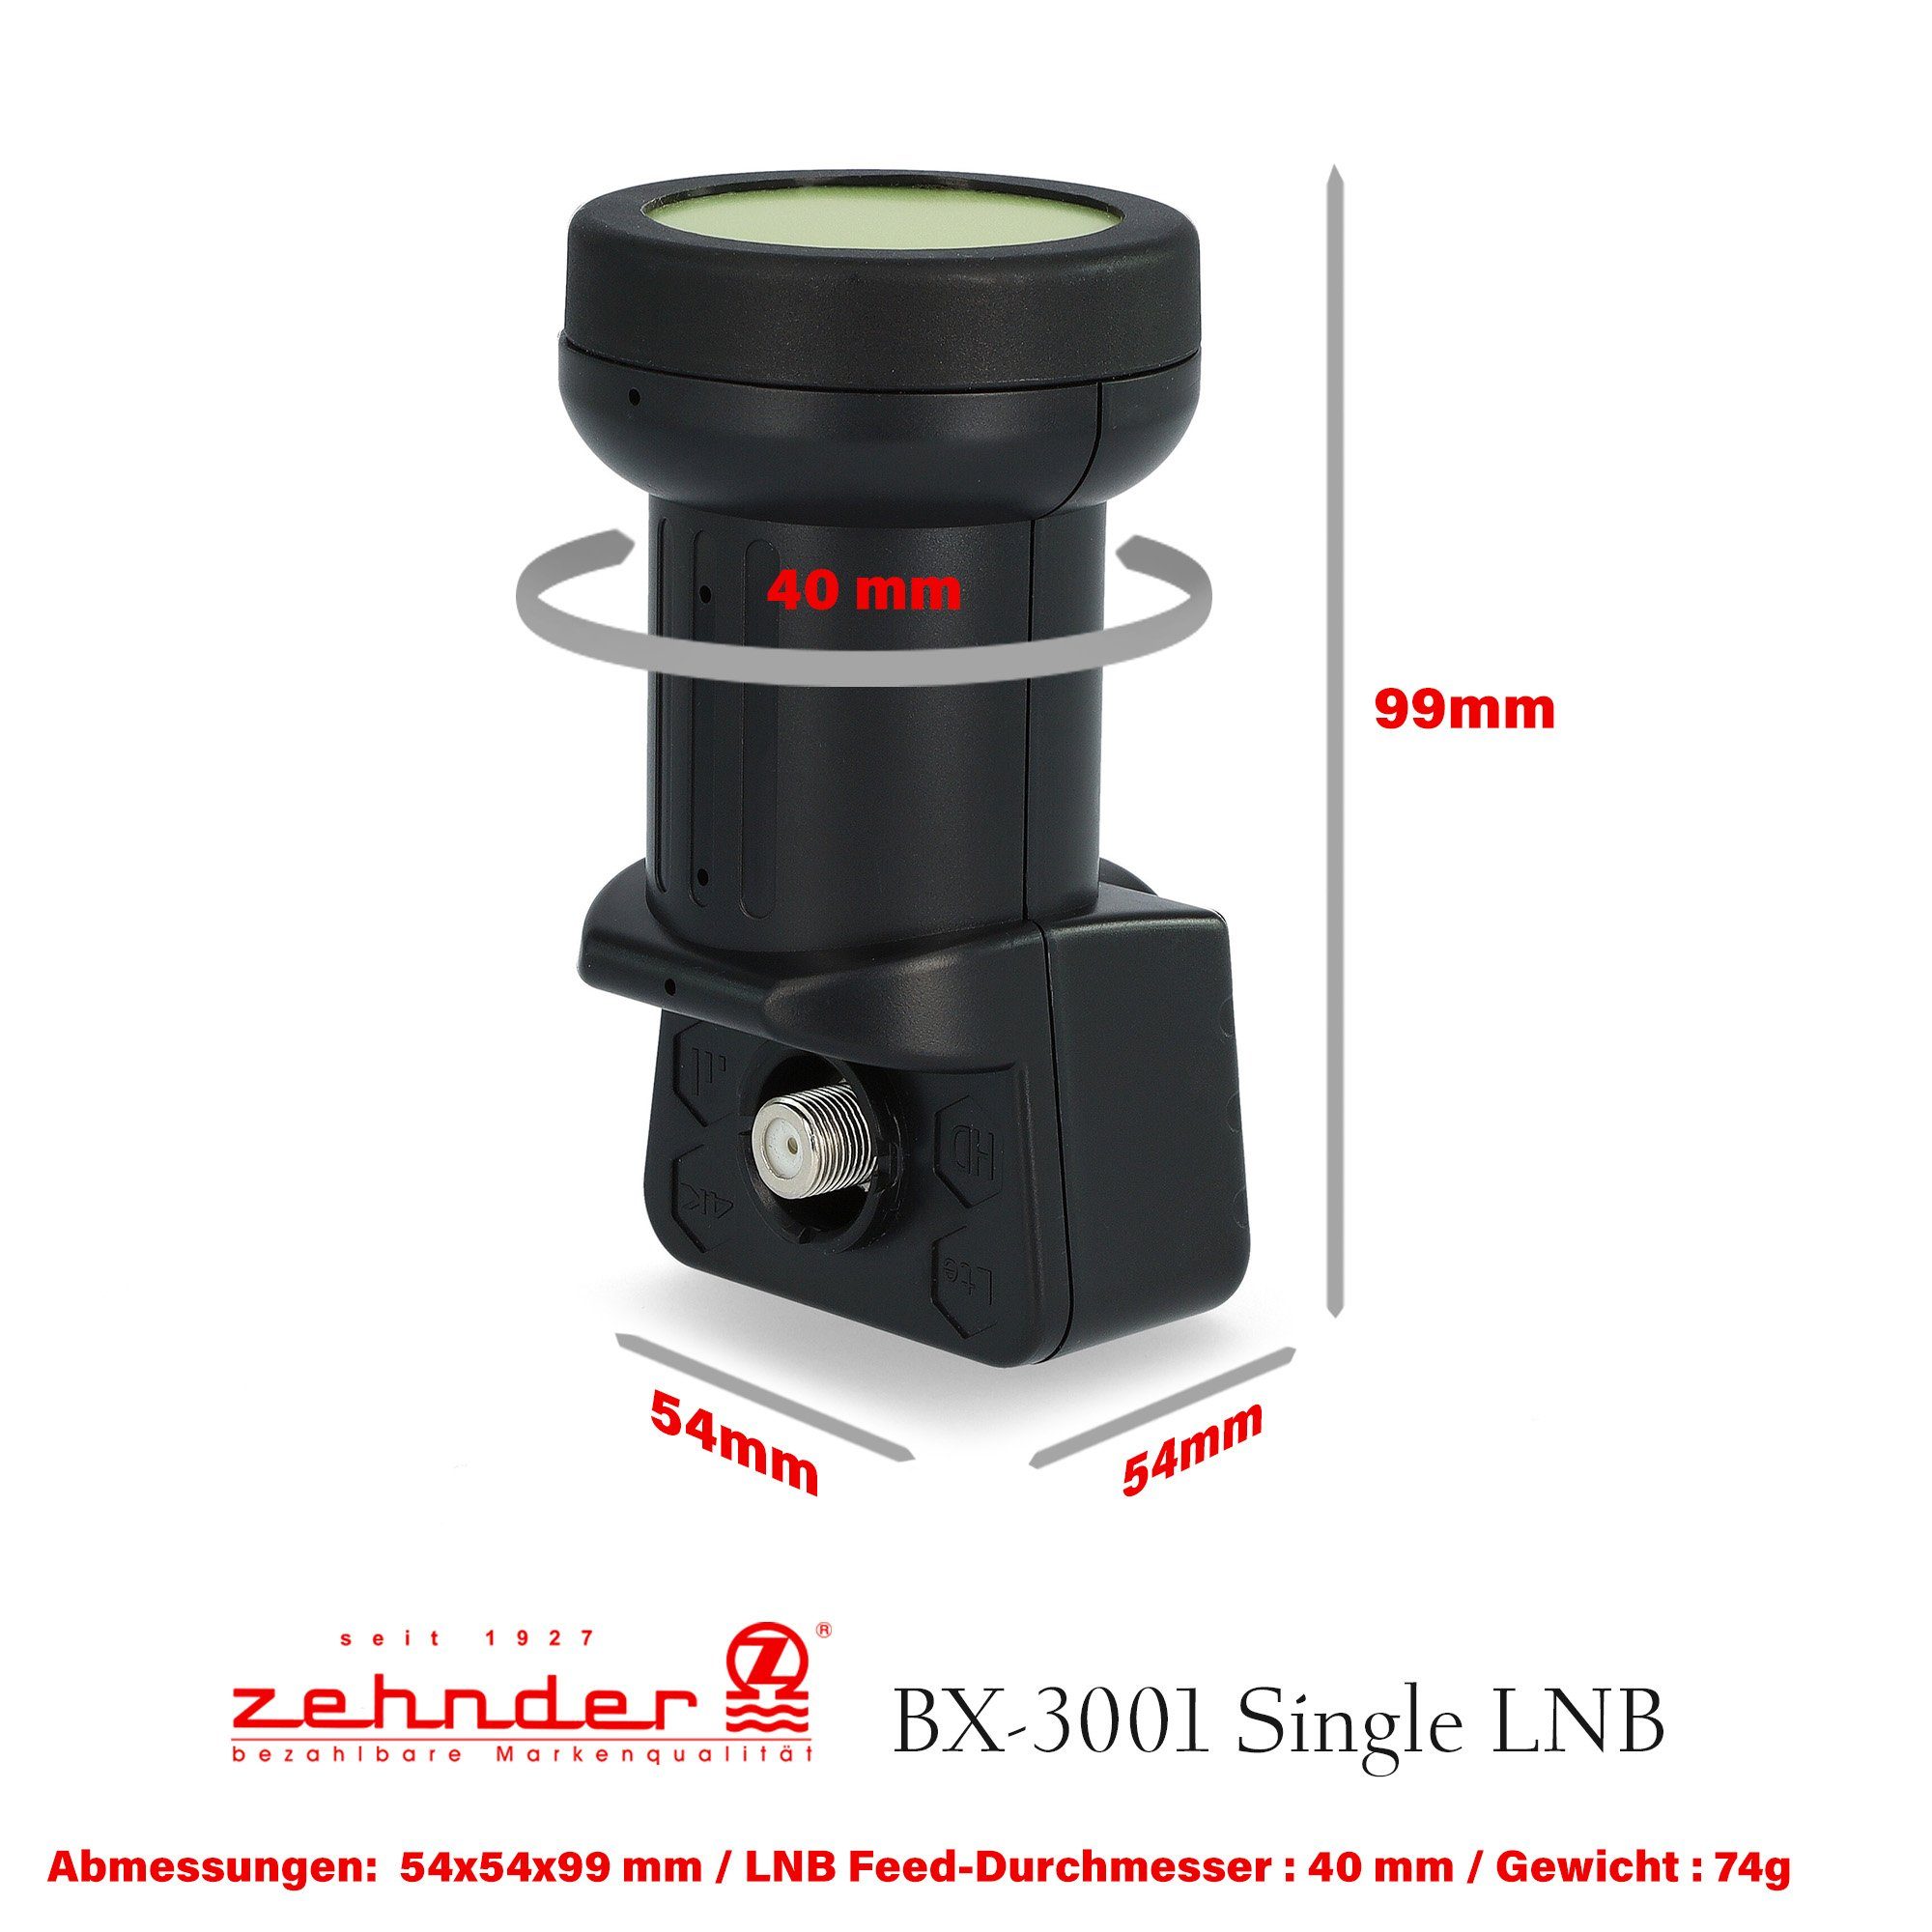 Zehnder Single LNB Sun mit Teilnehmer Wetterschutzkappe) (1 Protect BX3001 Universal-Single-LNB Sun und UV Protect, Schutz